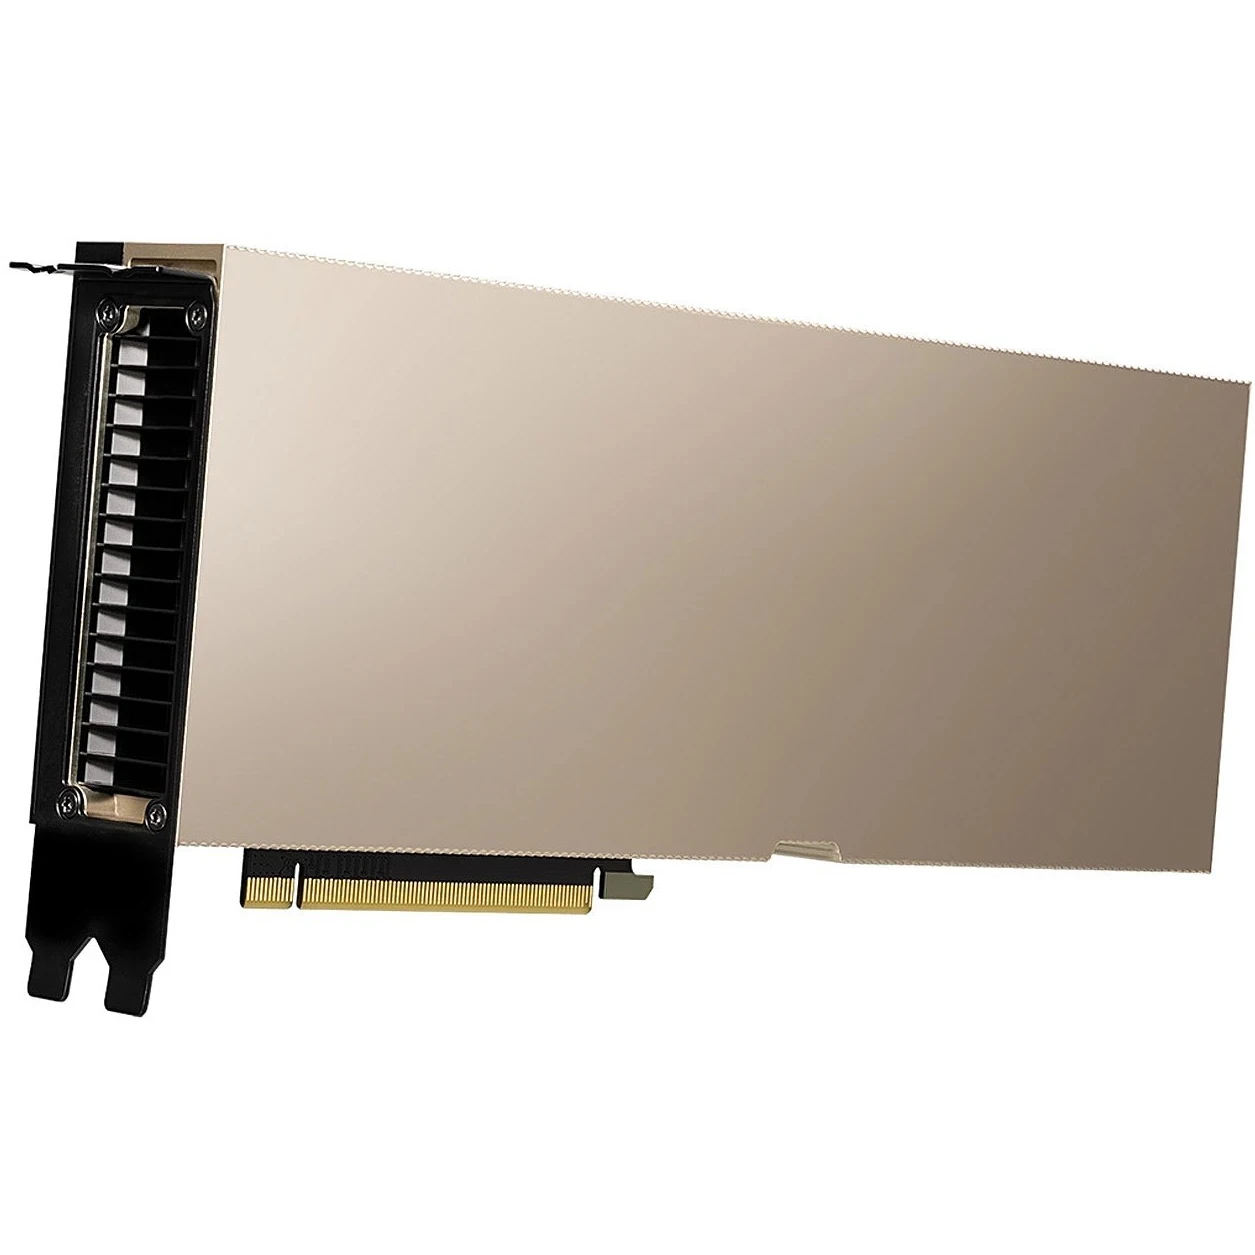 

Nividia cmp 50HX 90HX 170HX 220HX A10 A16 A30 PCIe A40 PCIe A100 PCIe RTX 3090 3090 ti A2000 A4000